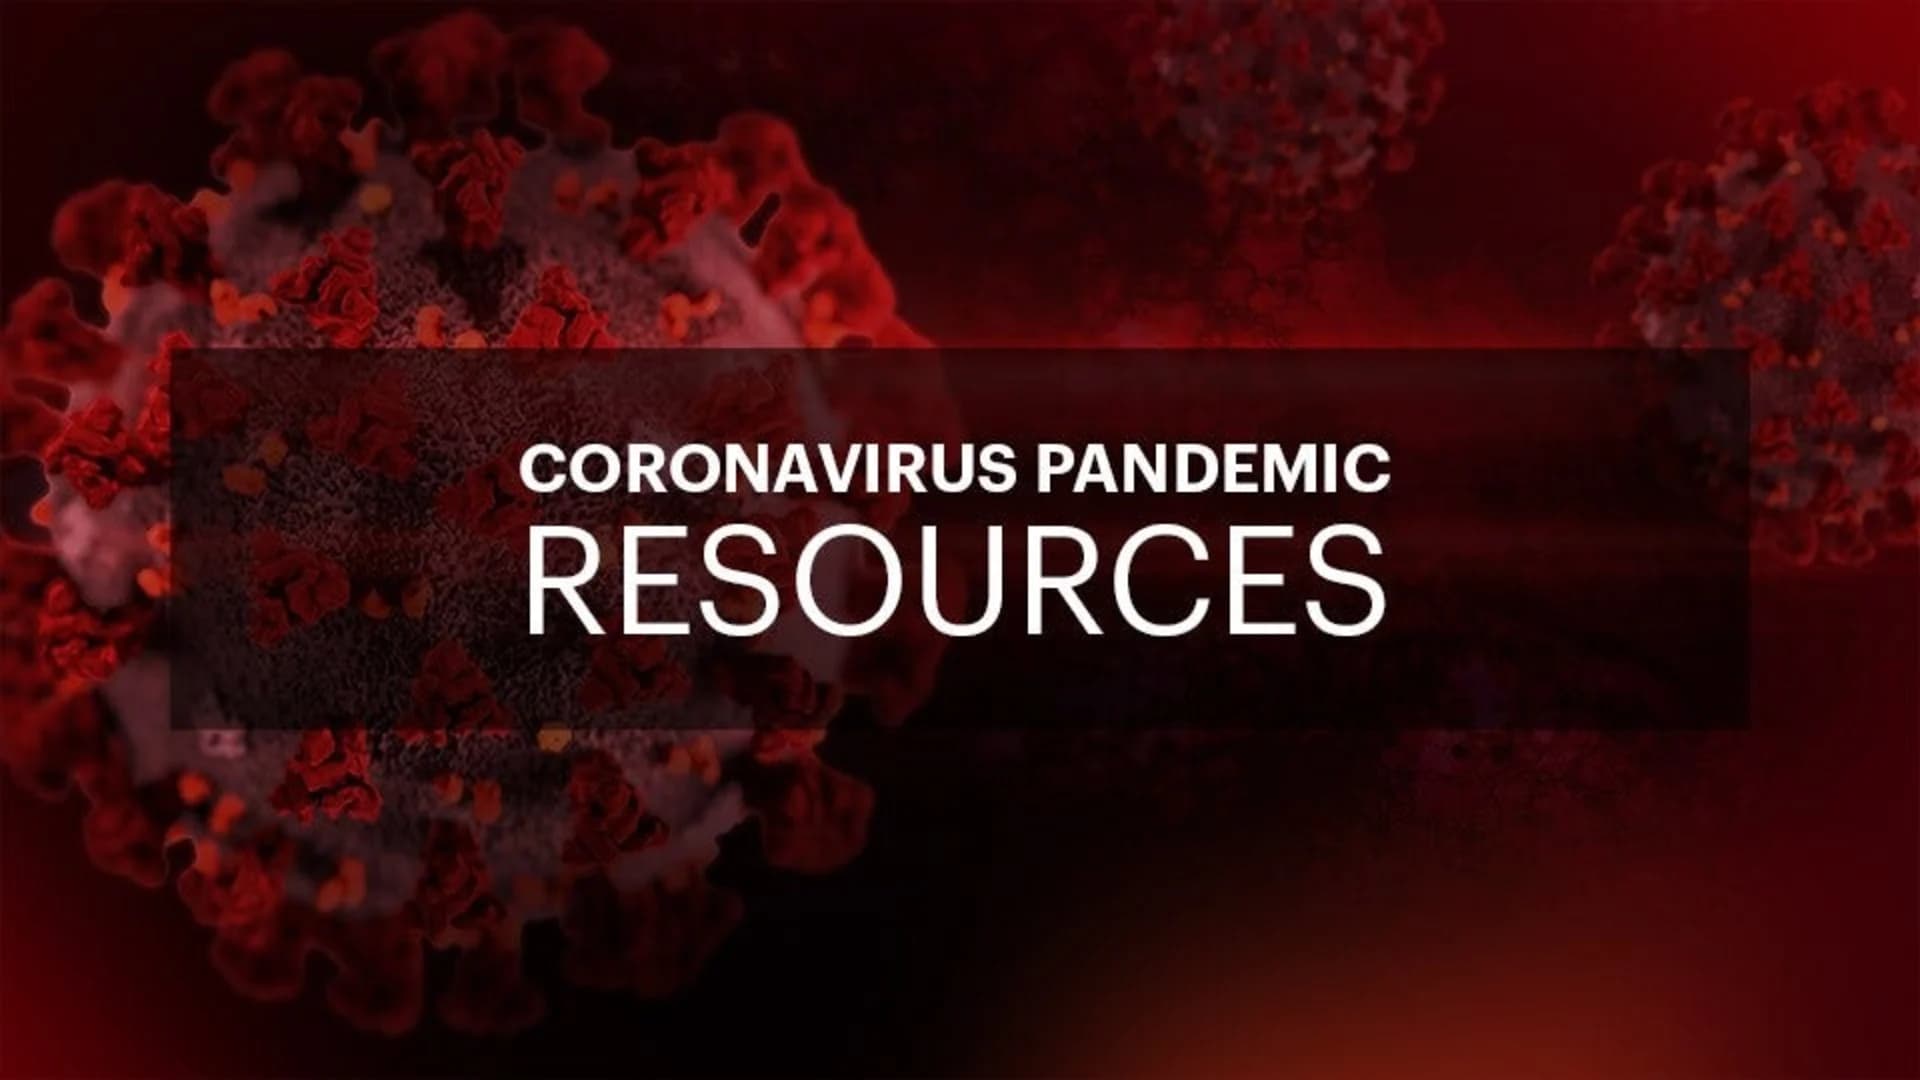 Coronavirus resources: Important links